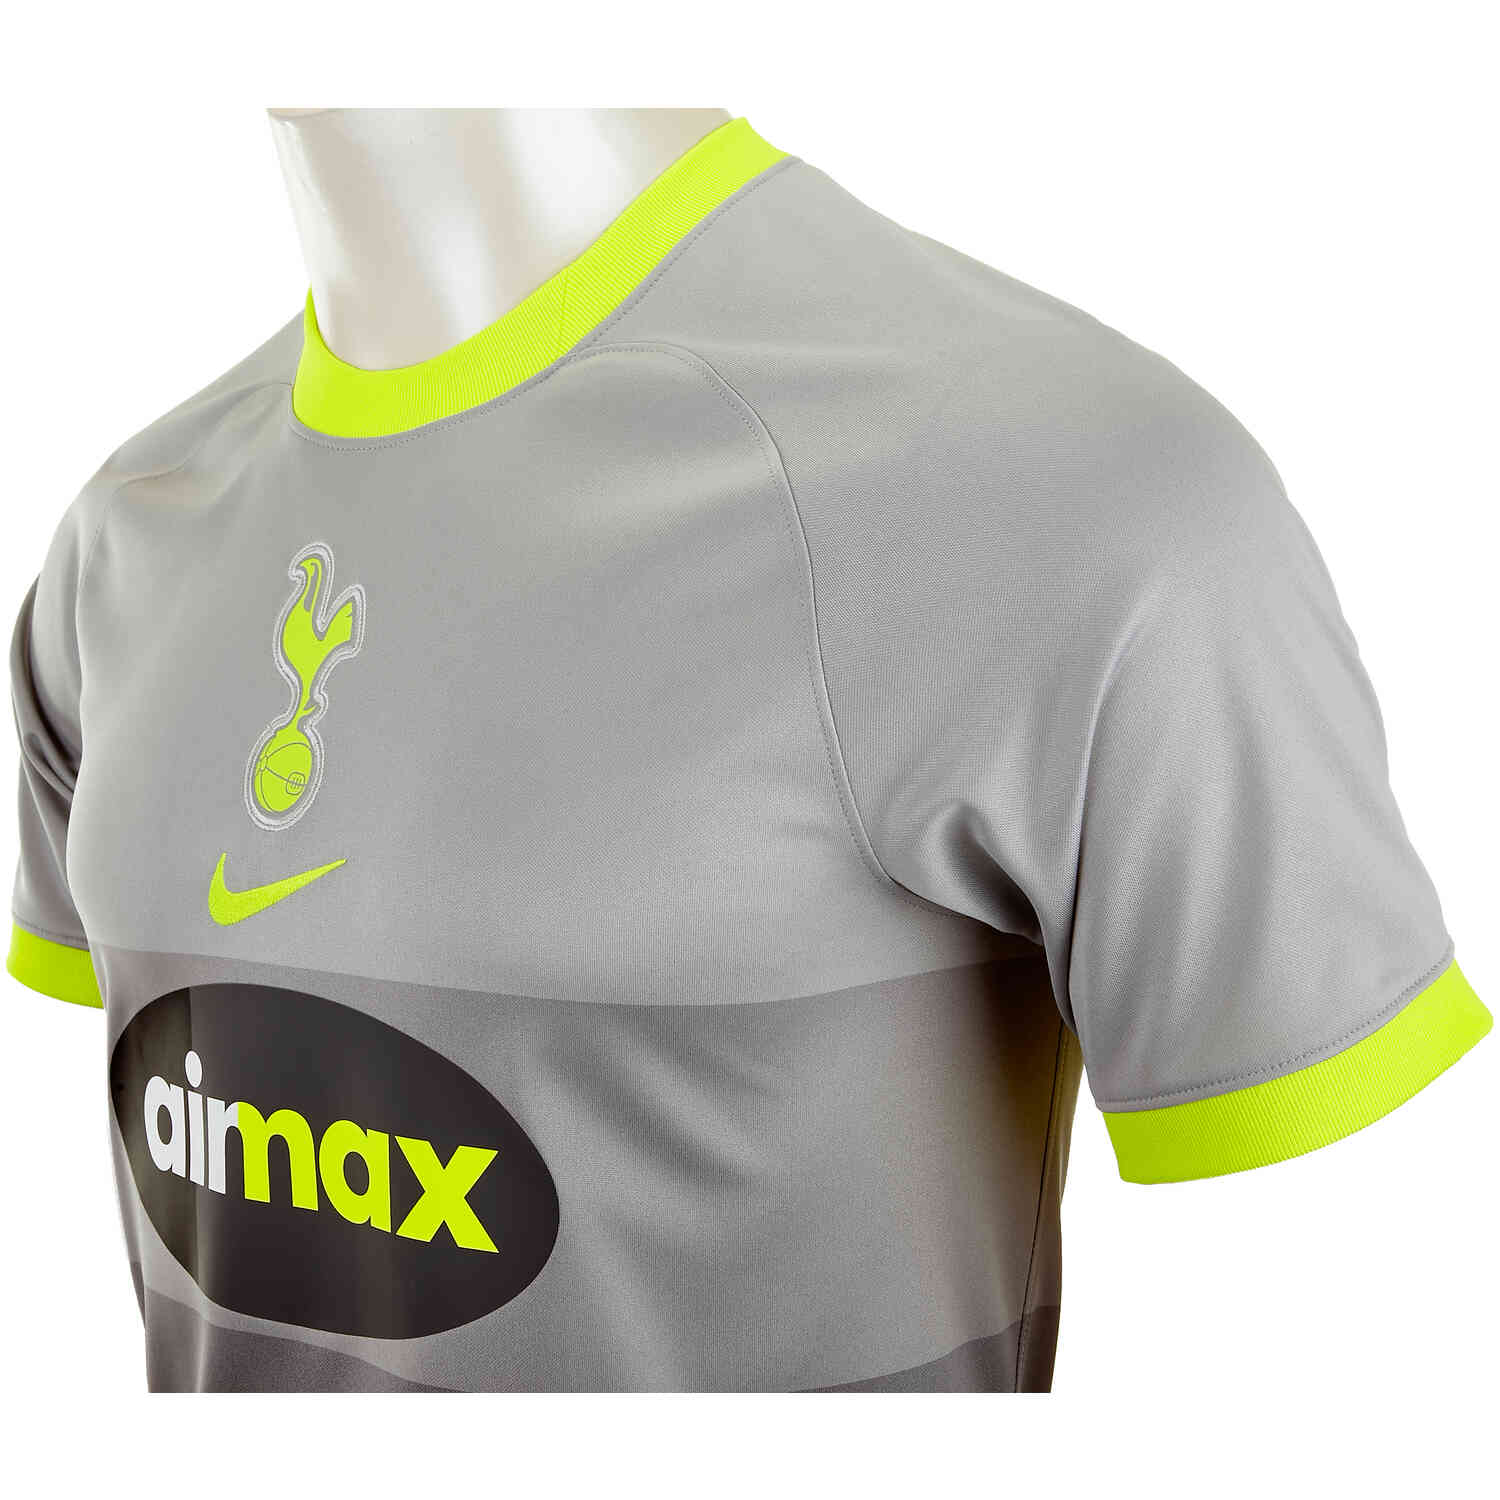 Nike 2020-21 Tottenham Youth Away Jersey - Green